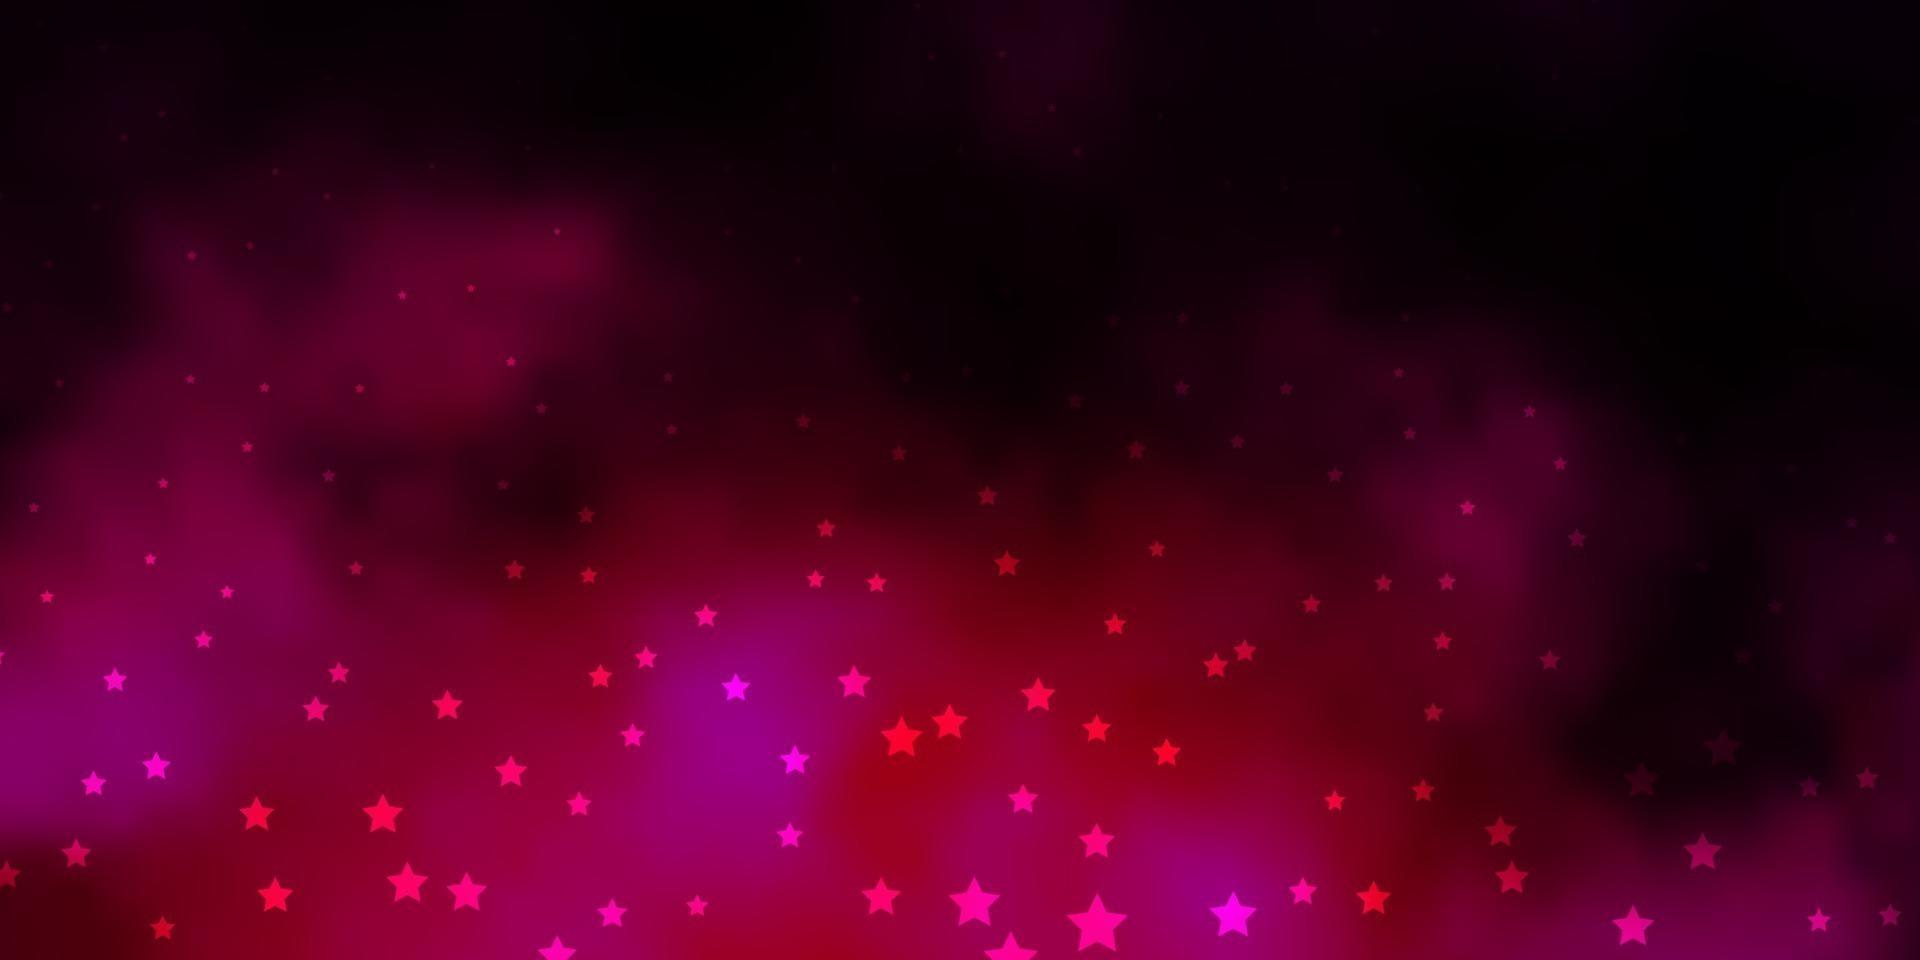 Dark Pink vector template with neon stars.